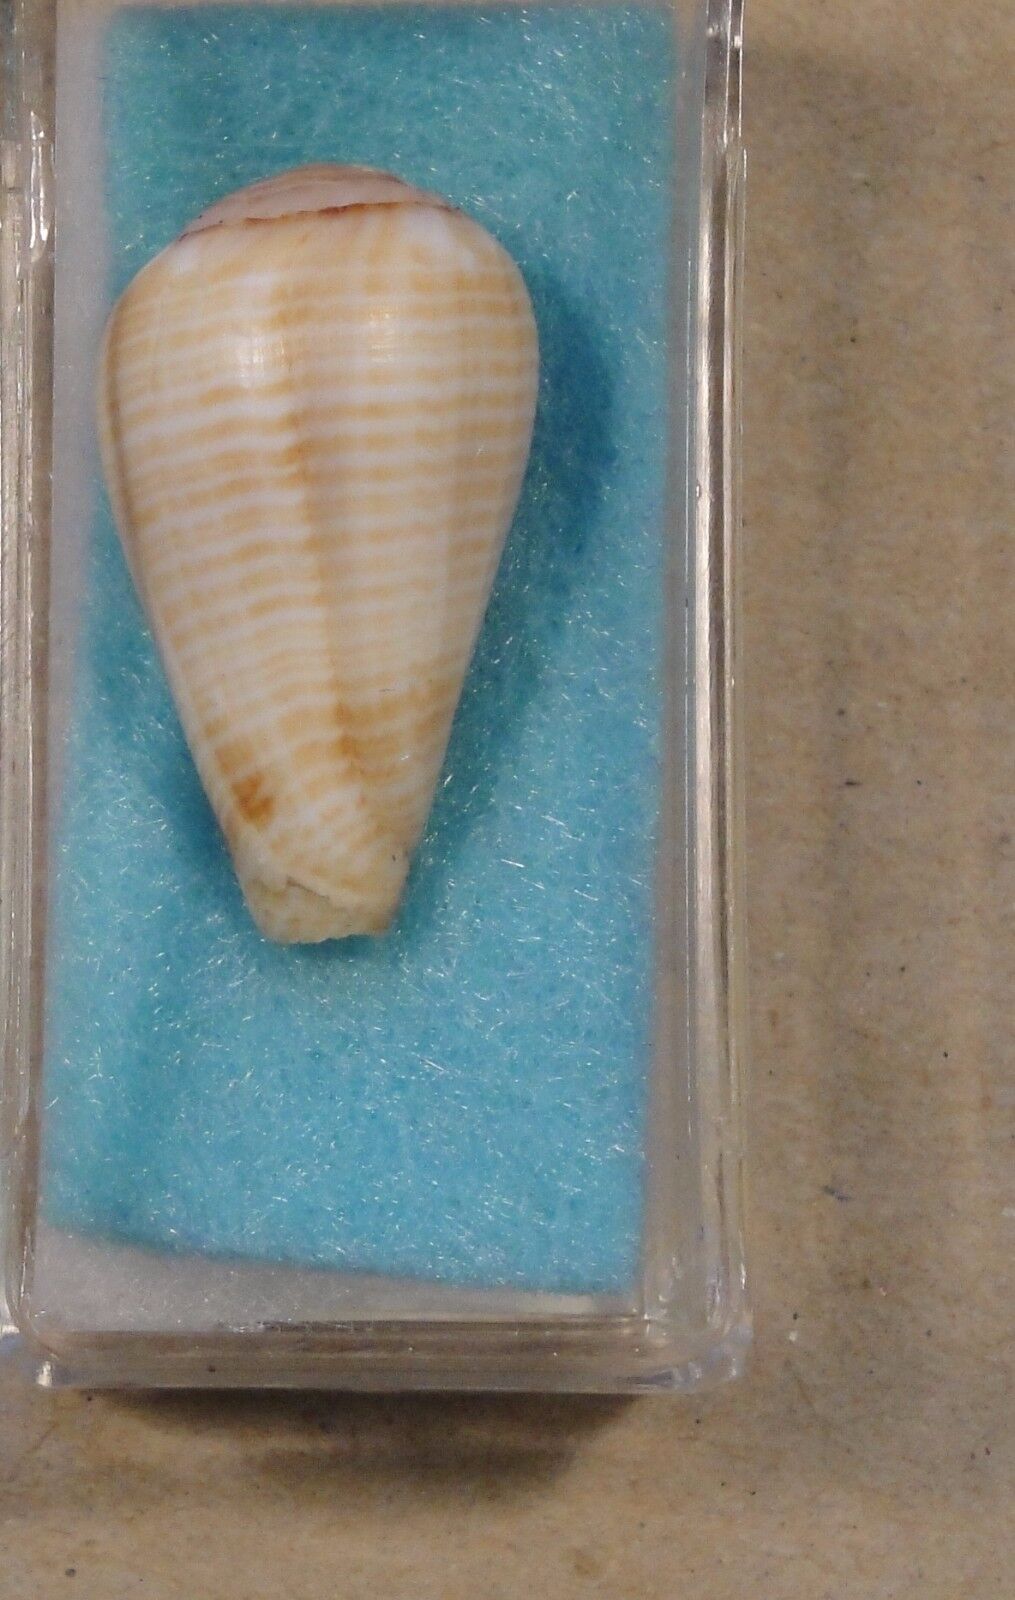 Conus Variegatus 24mm Port Alexander,Angola 2 fathoms formerly C. Fuscolineatus